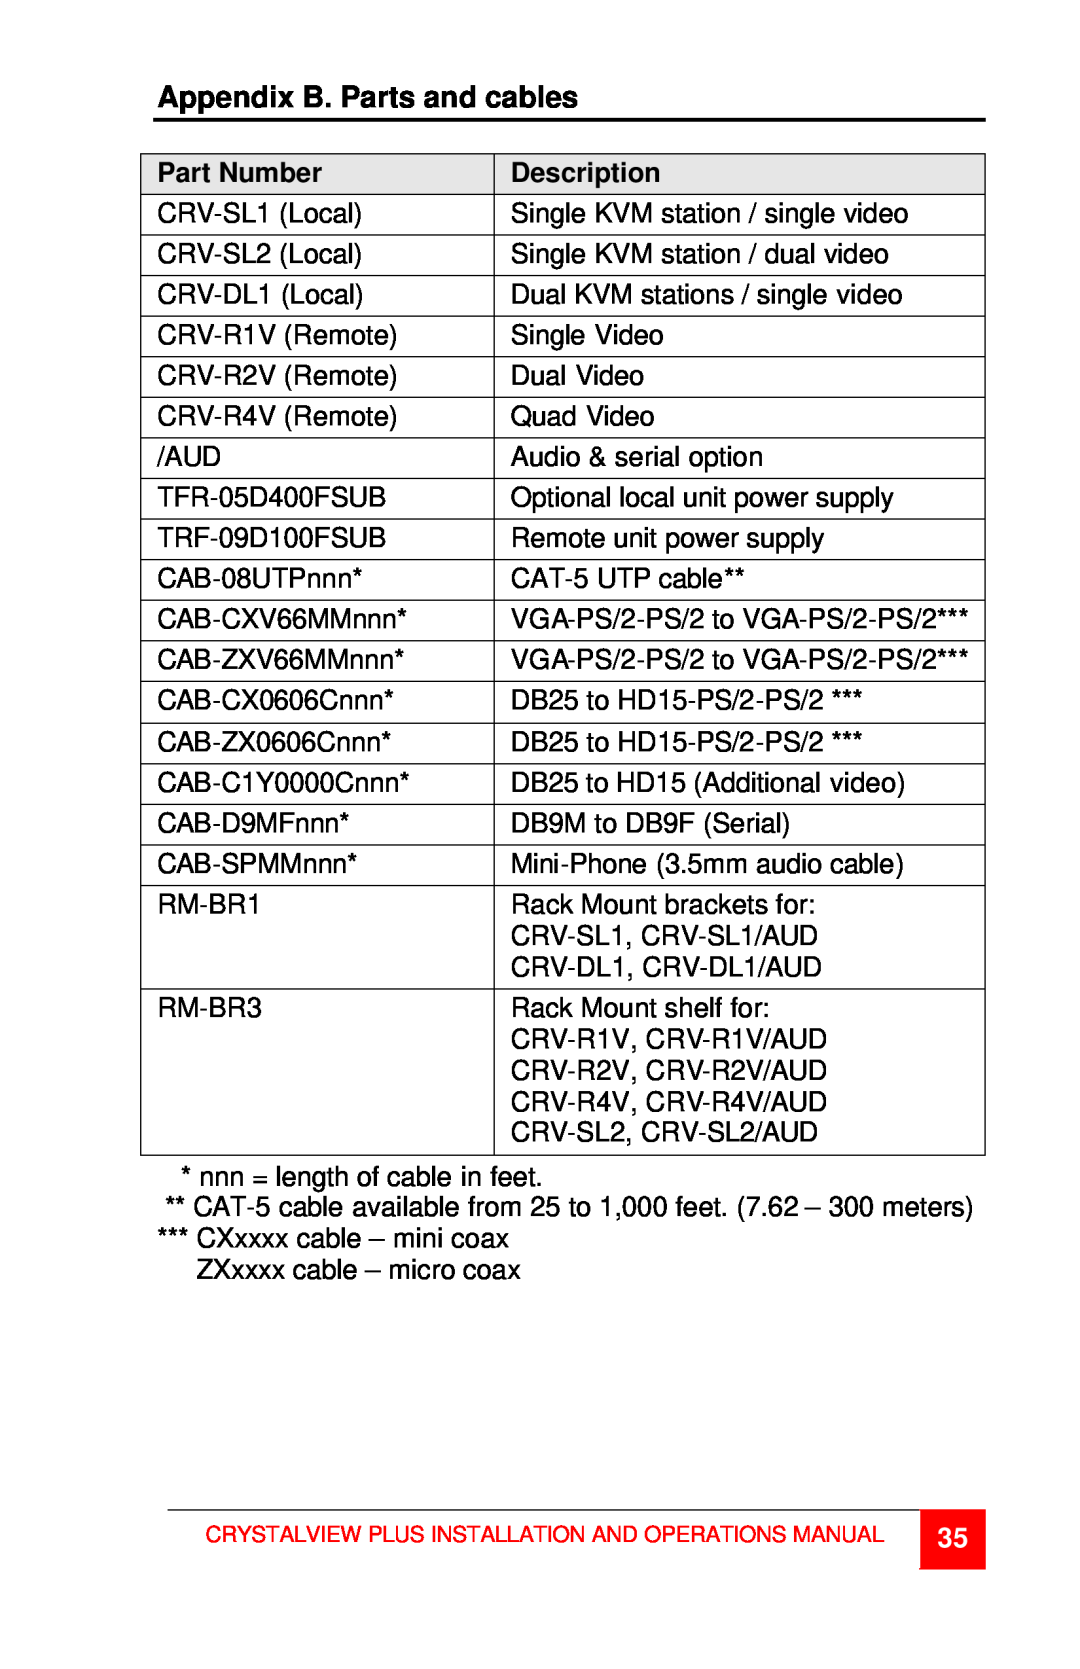 Rose electronic CrystalView Plus manual Appendix B. Parts and cables, Part Number, Description 